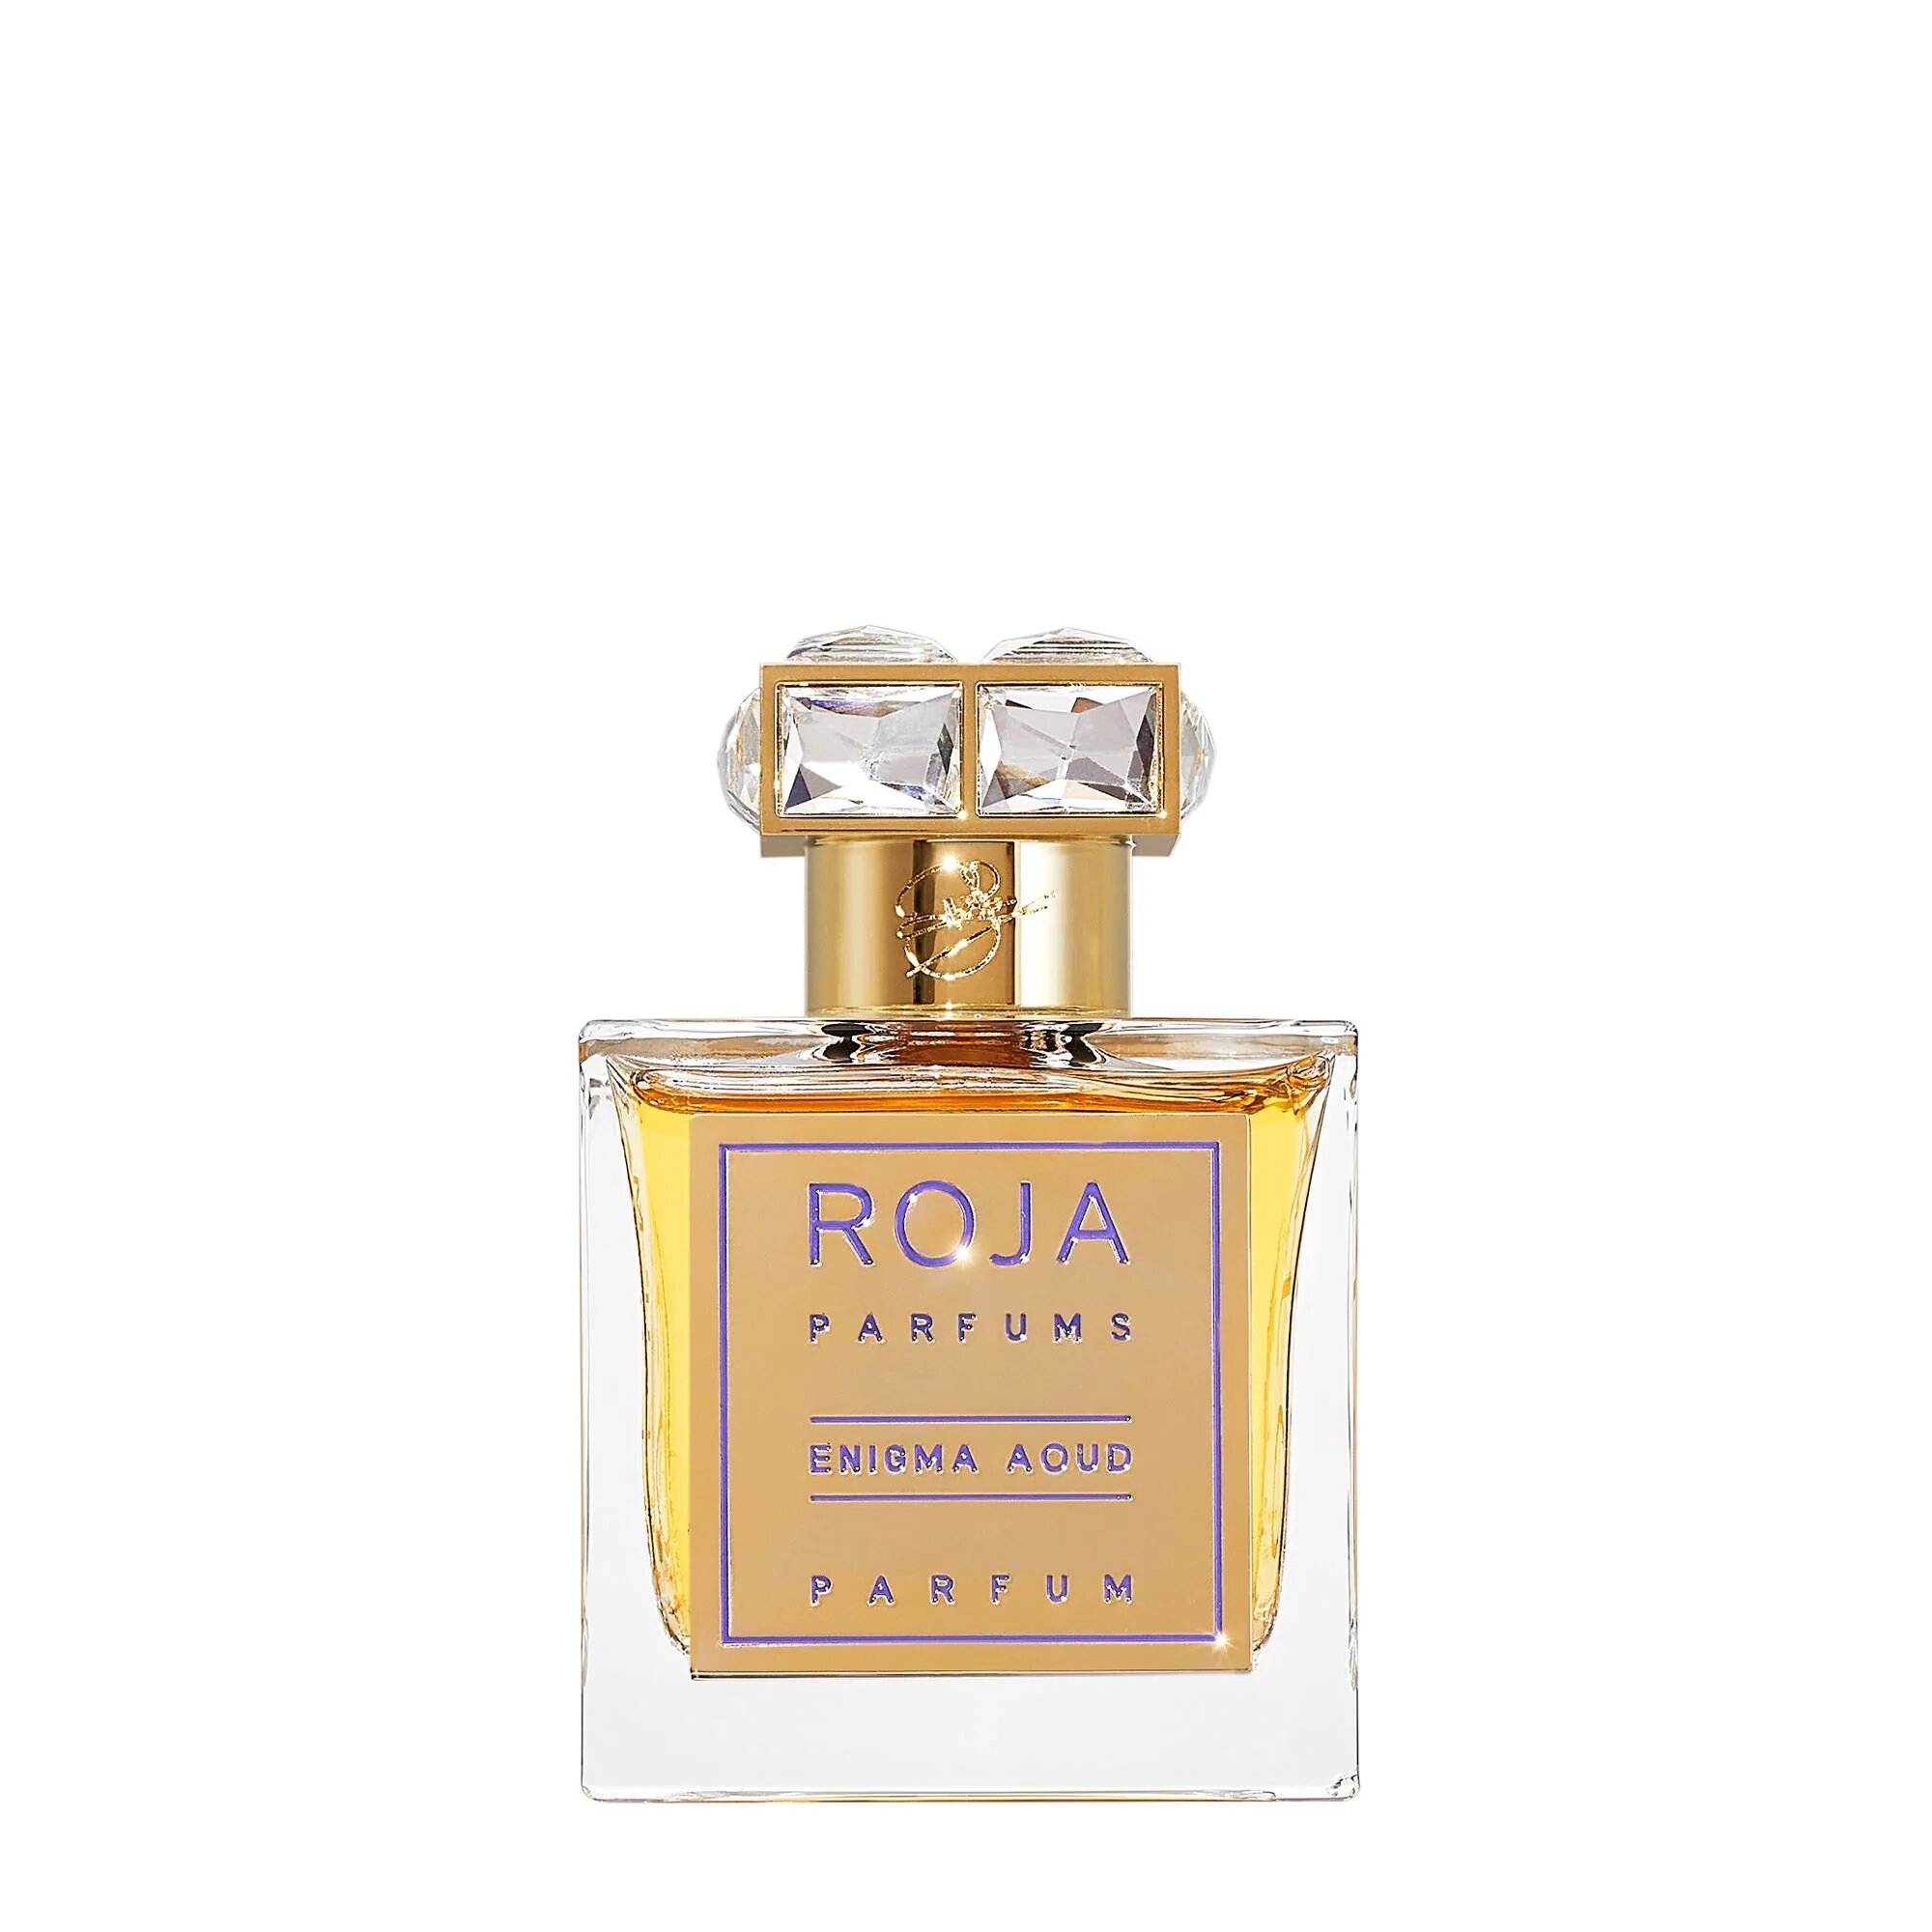 enigma-aoud-fragrance-roja-parfums-100ml-407979